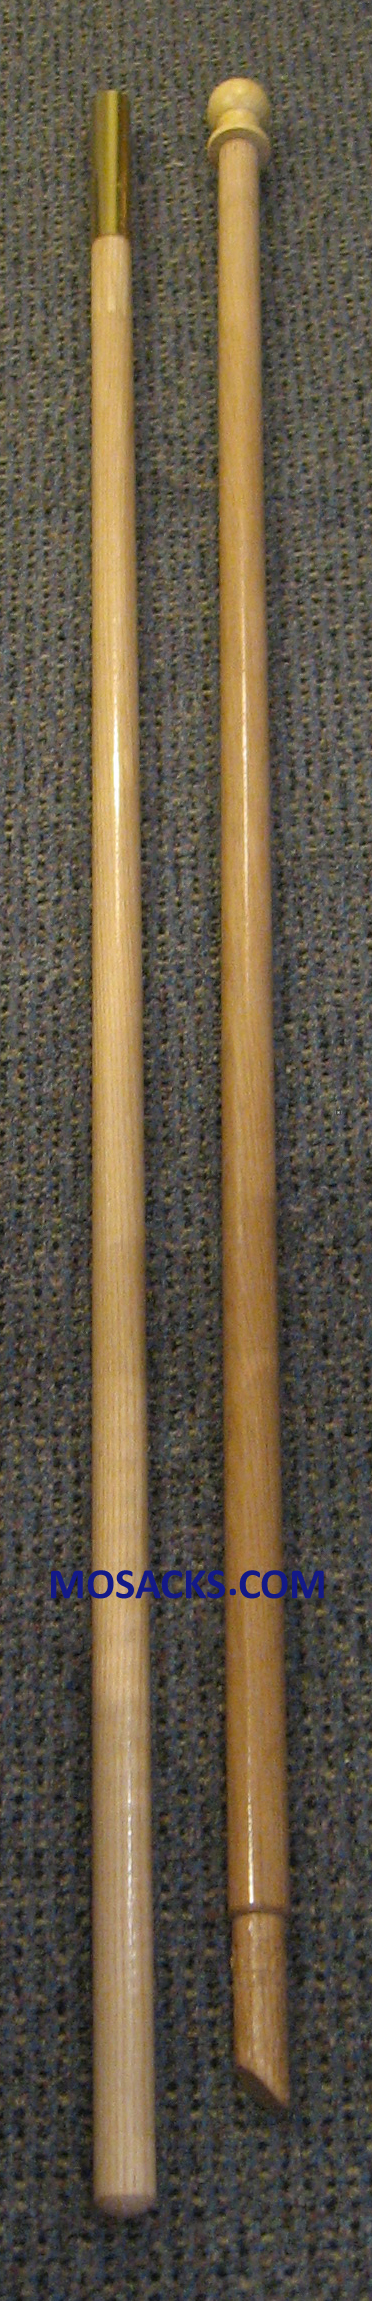 Two-Piece 10' Outdoor Blonde Hardwood Flagpole w/Halyard, #3790